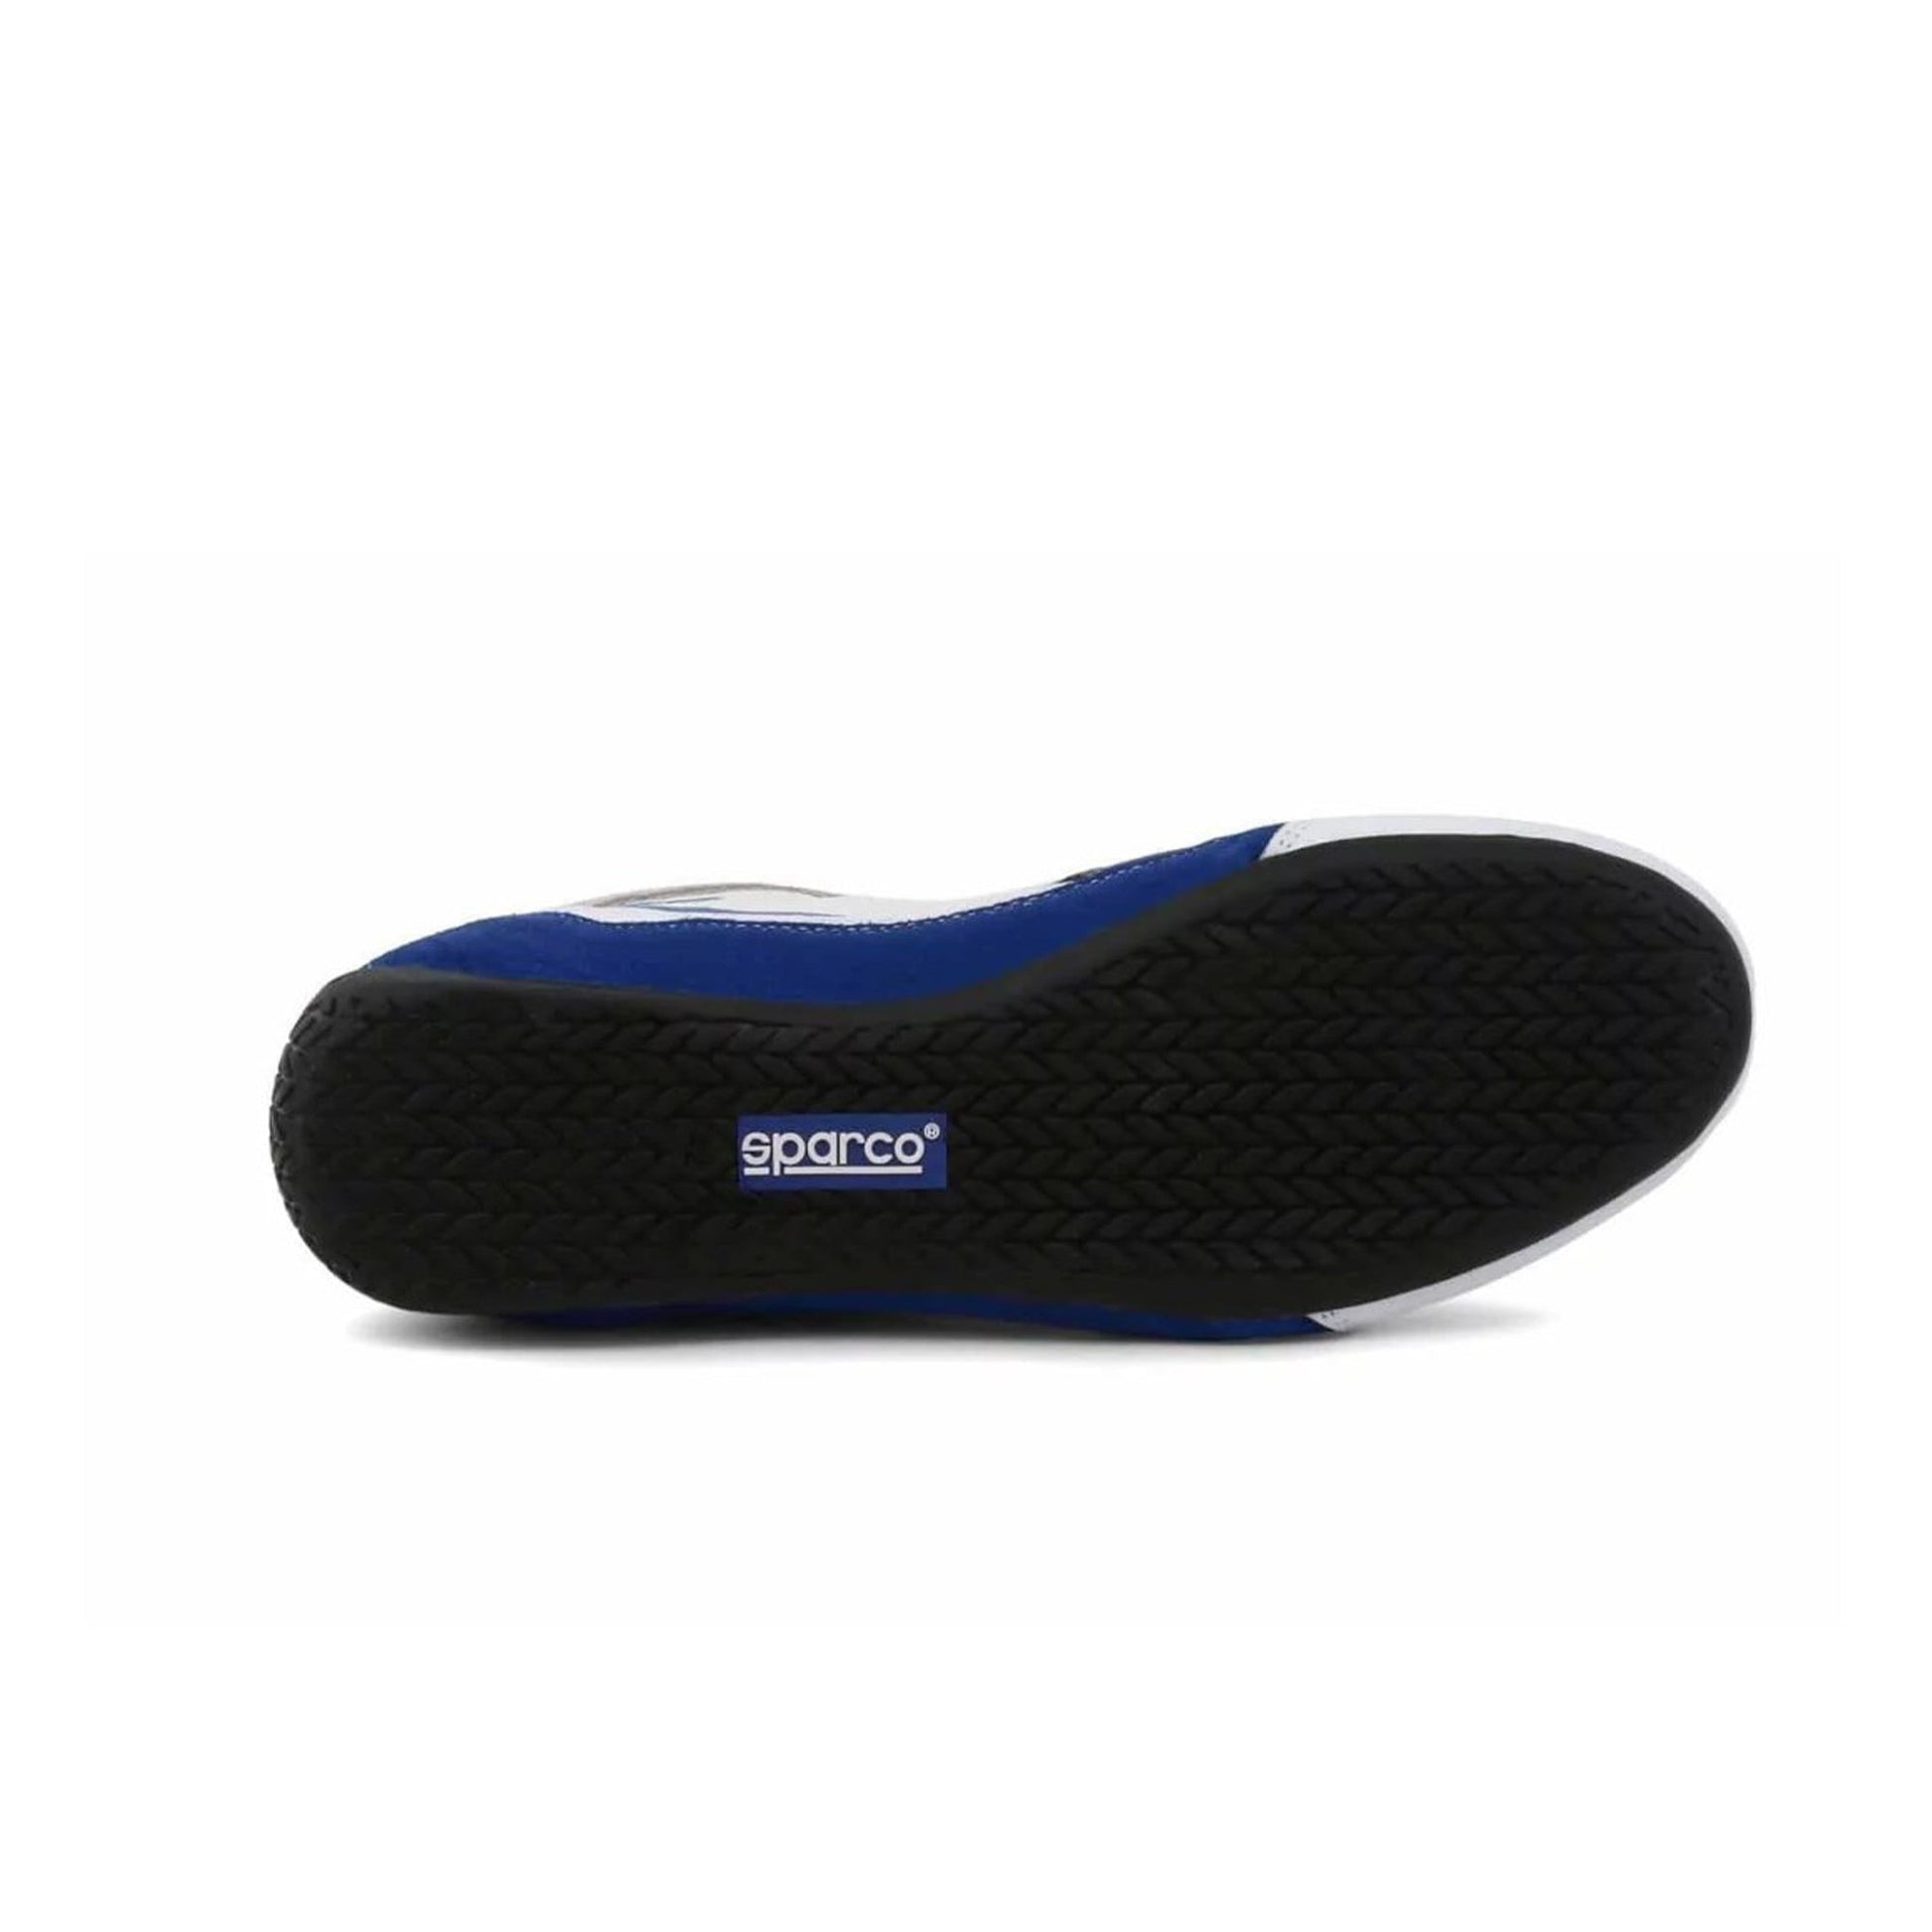 Sparco hombre zapatillas SP-F7 - 44 - Blanco/Azul - comprar en KAPLES SHOES